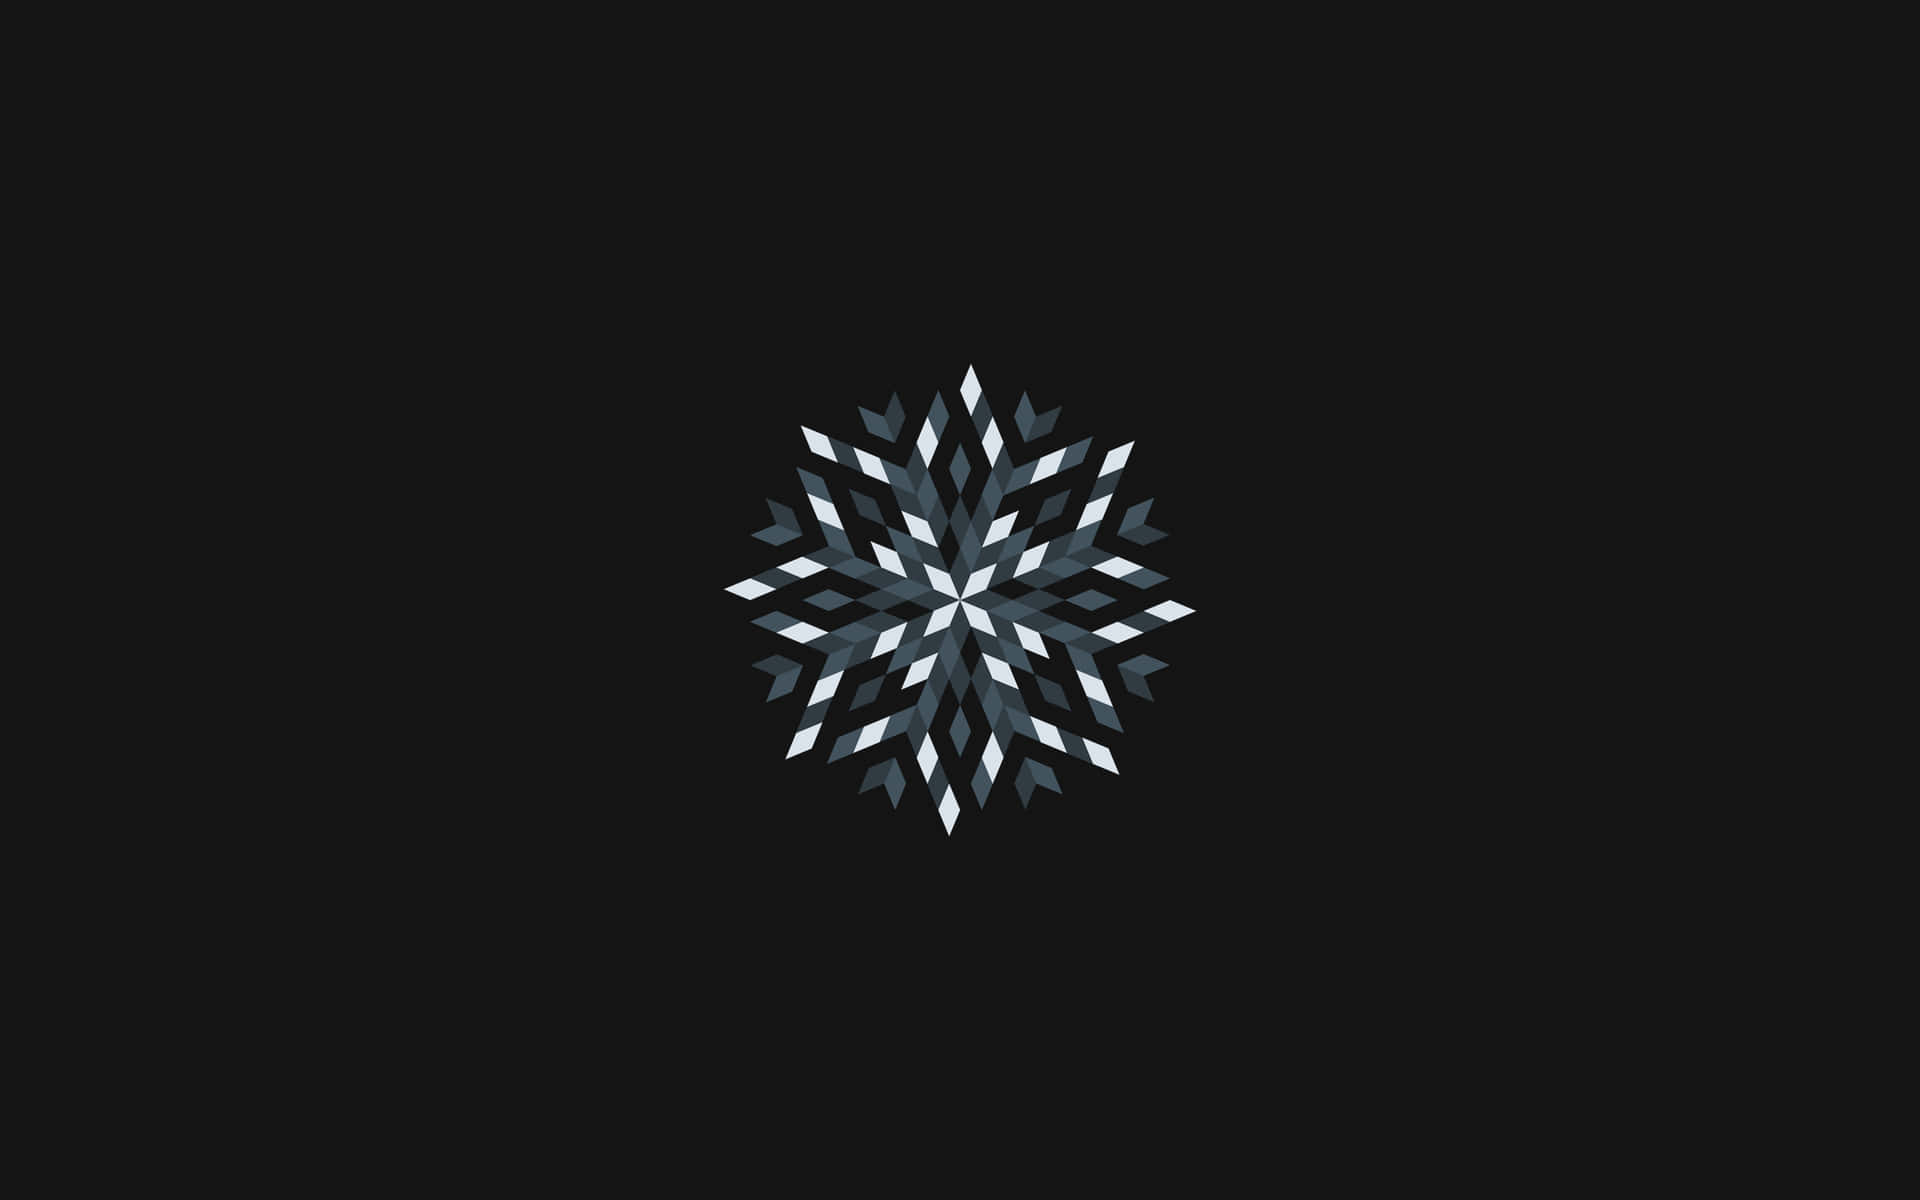 1080p Minimalist Snowflake Wallpaper